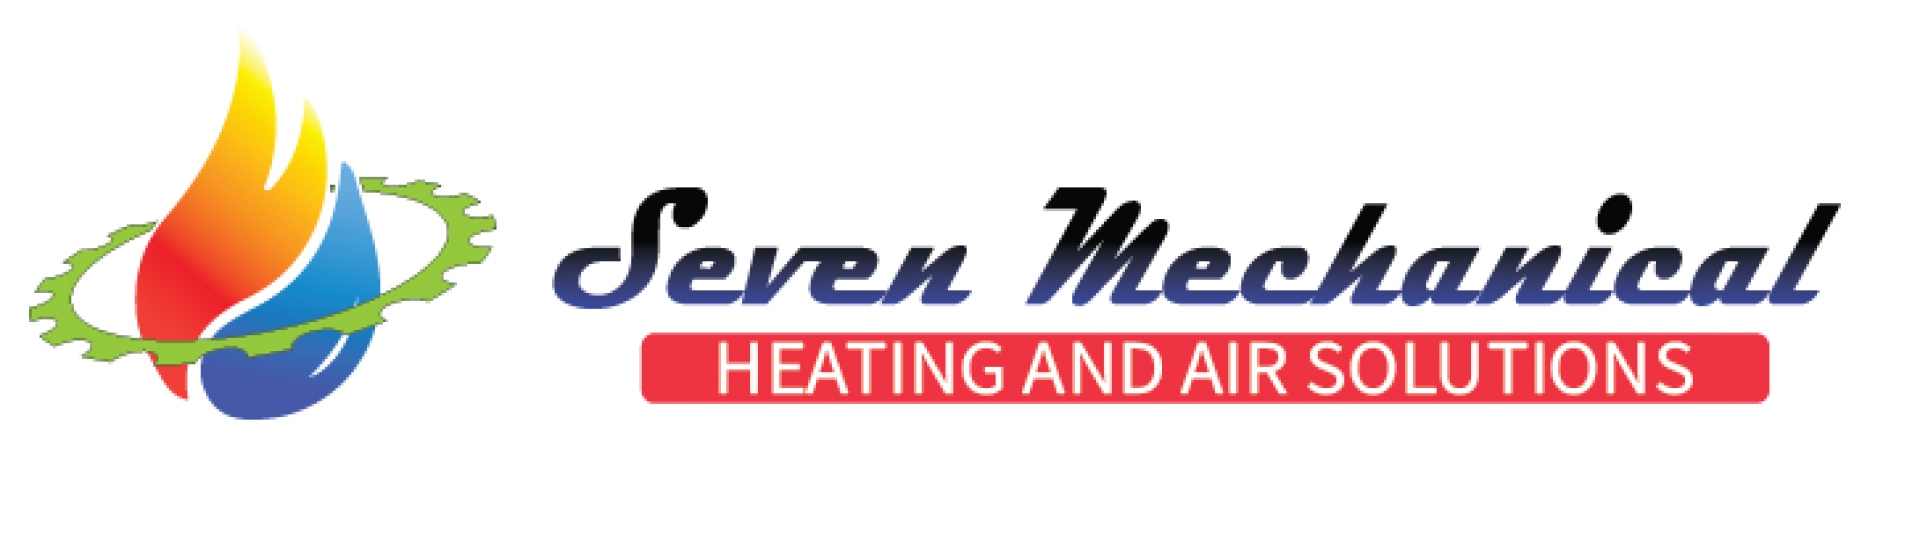 Seven Mechanical Logo